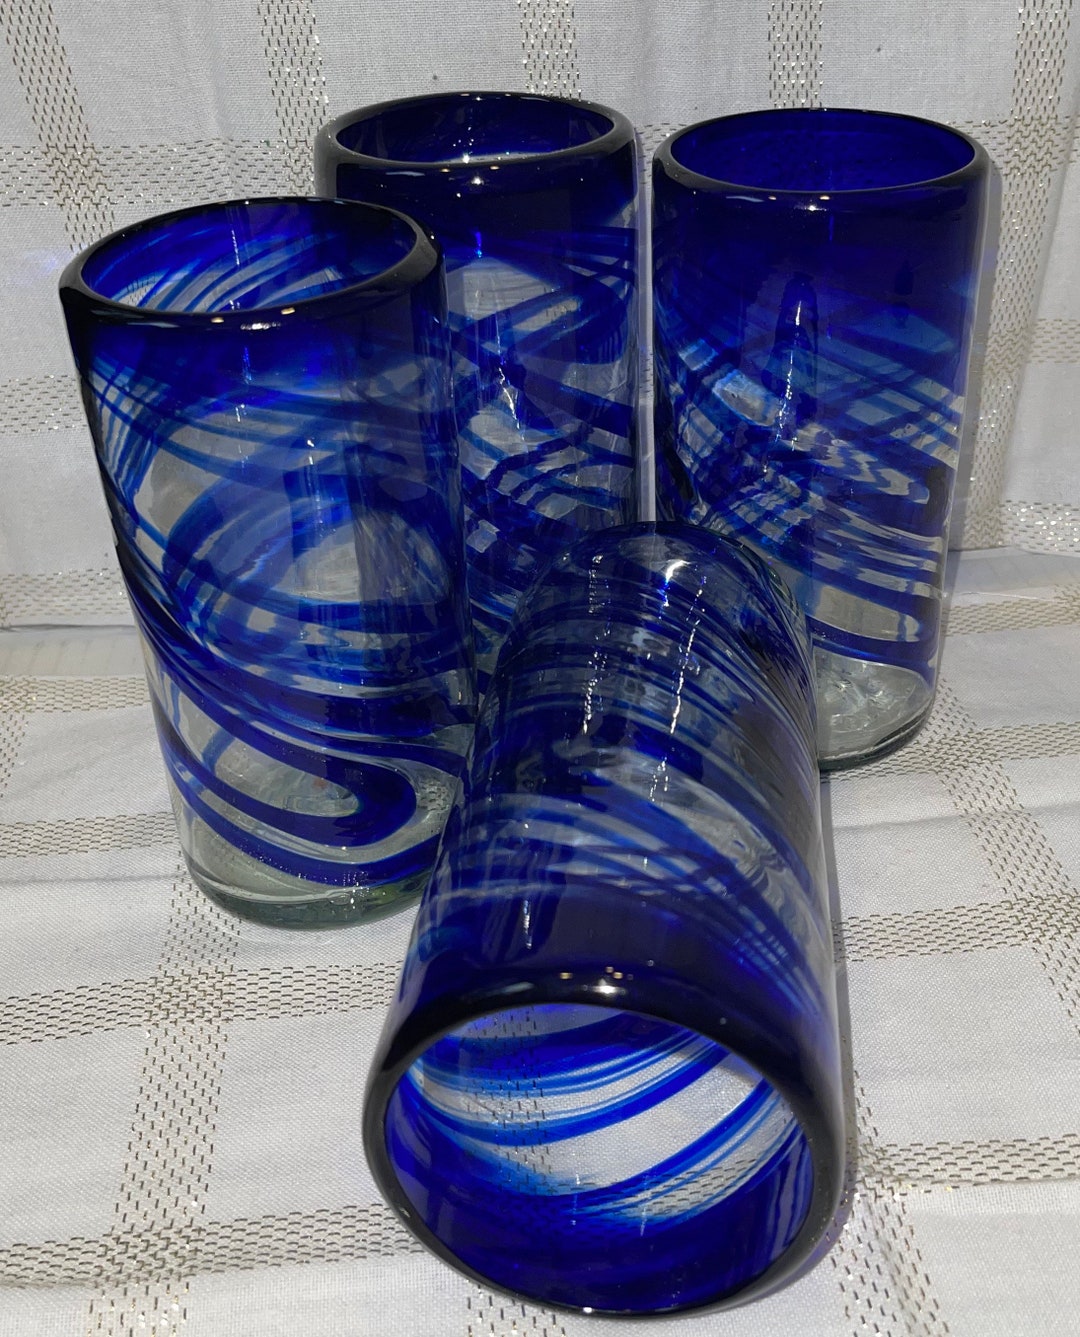 Vasos de remolino azul Vasos altos caídos Juego de 2 o 4 Vidrio elegante  soplado a mano 6.2 x 3 20 oz -  México